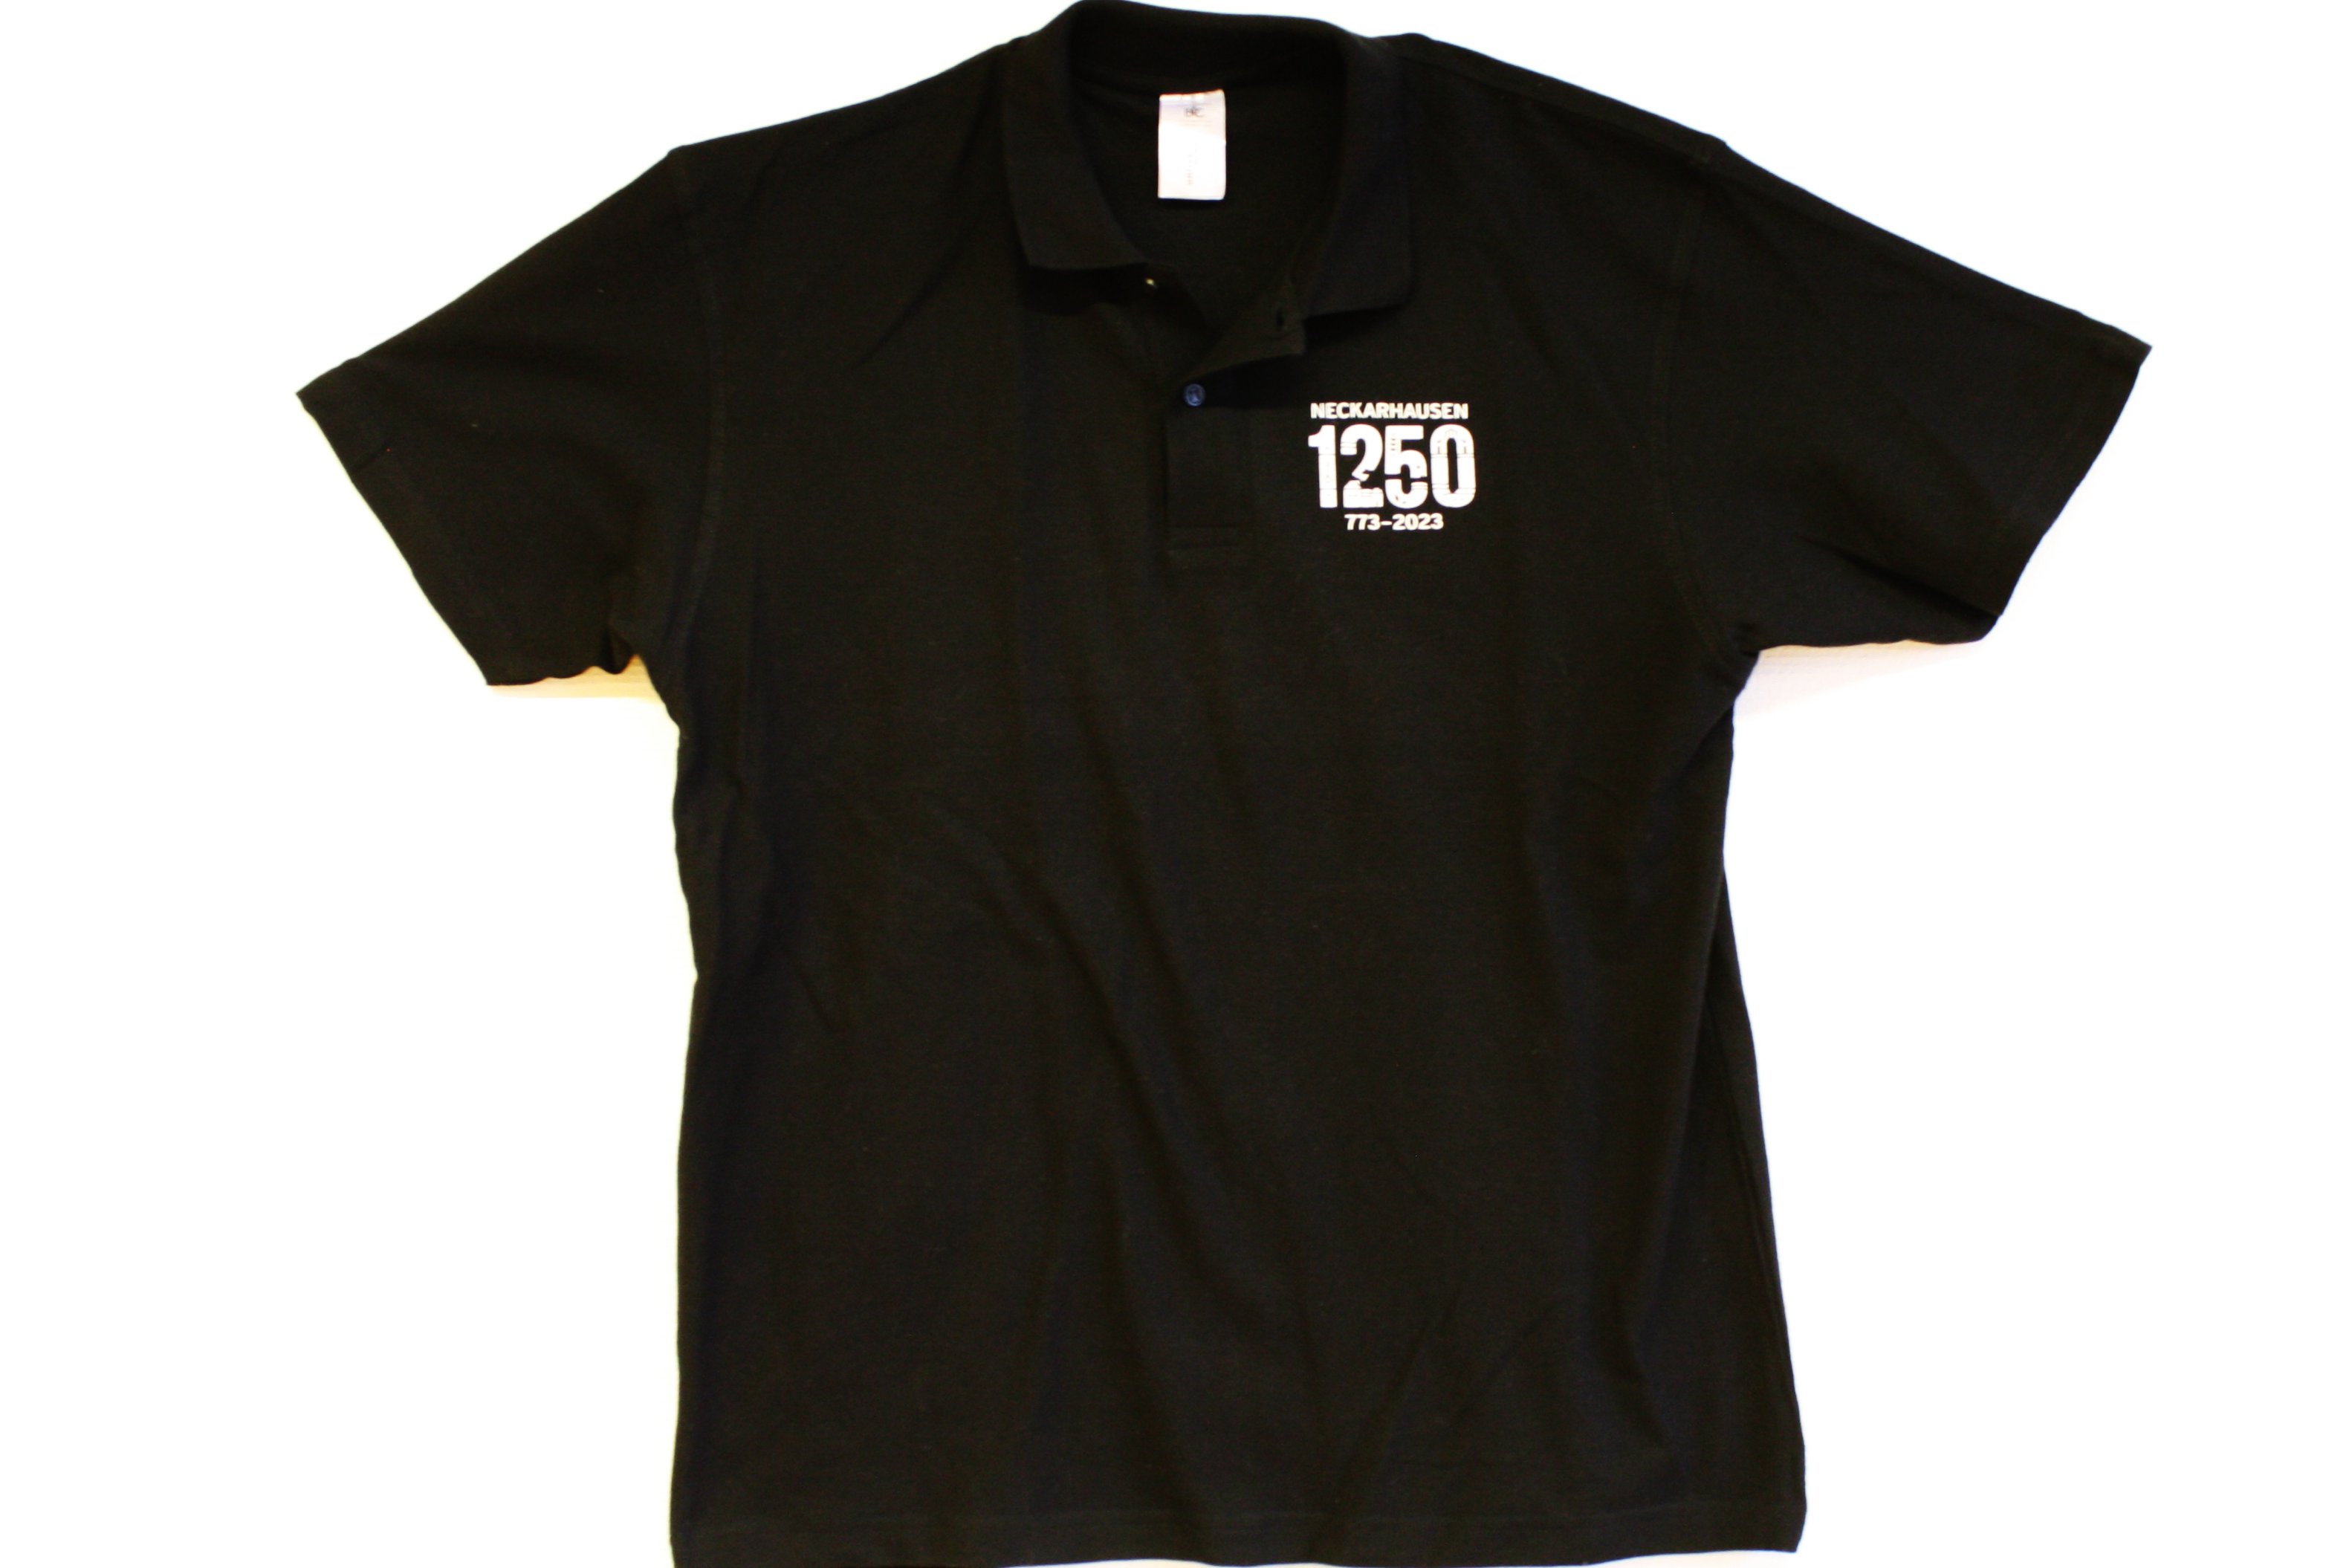  Polo-Shirt schwarz 1250 Jahre Neckarhausen 